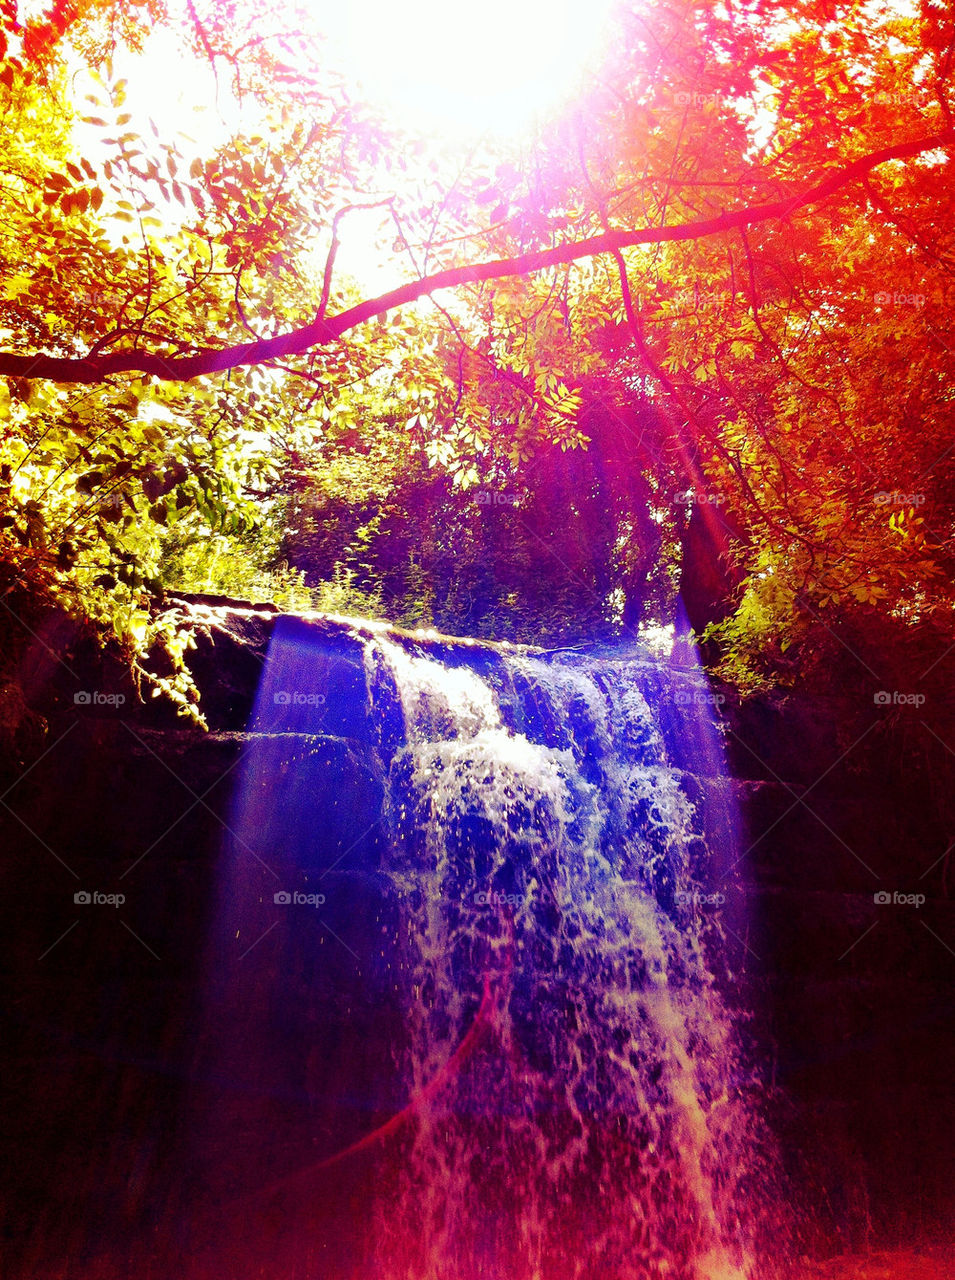 Magical waterfall